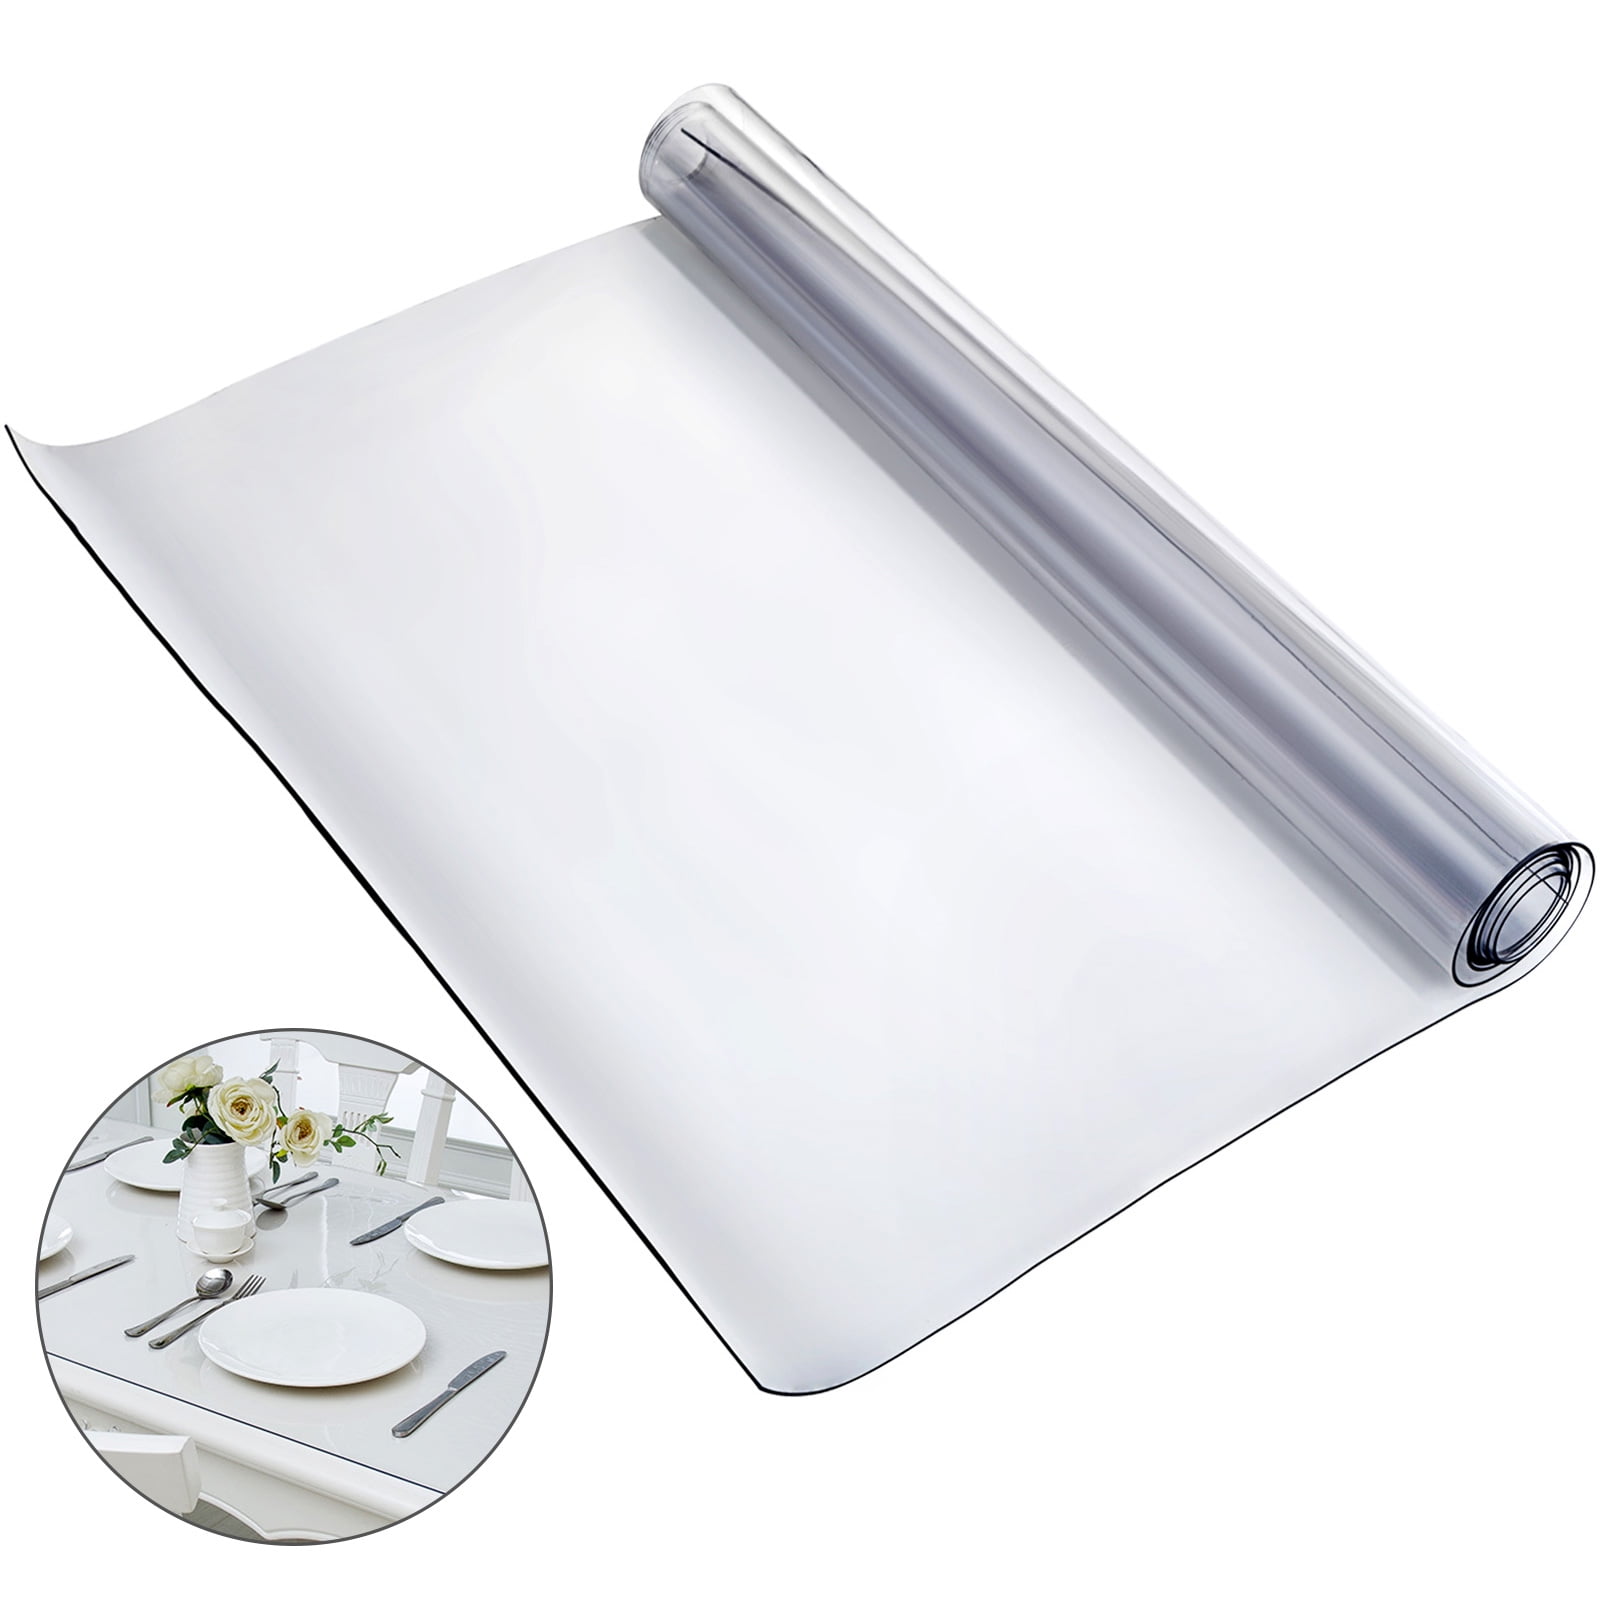 VEVORbrand 100 x 45 inch Waterproof Clear PVC Tablecloth, 1.5mm